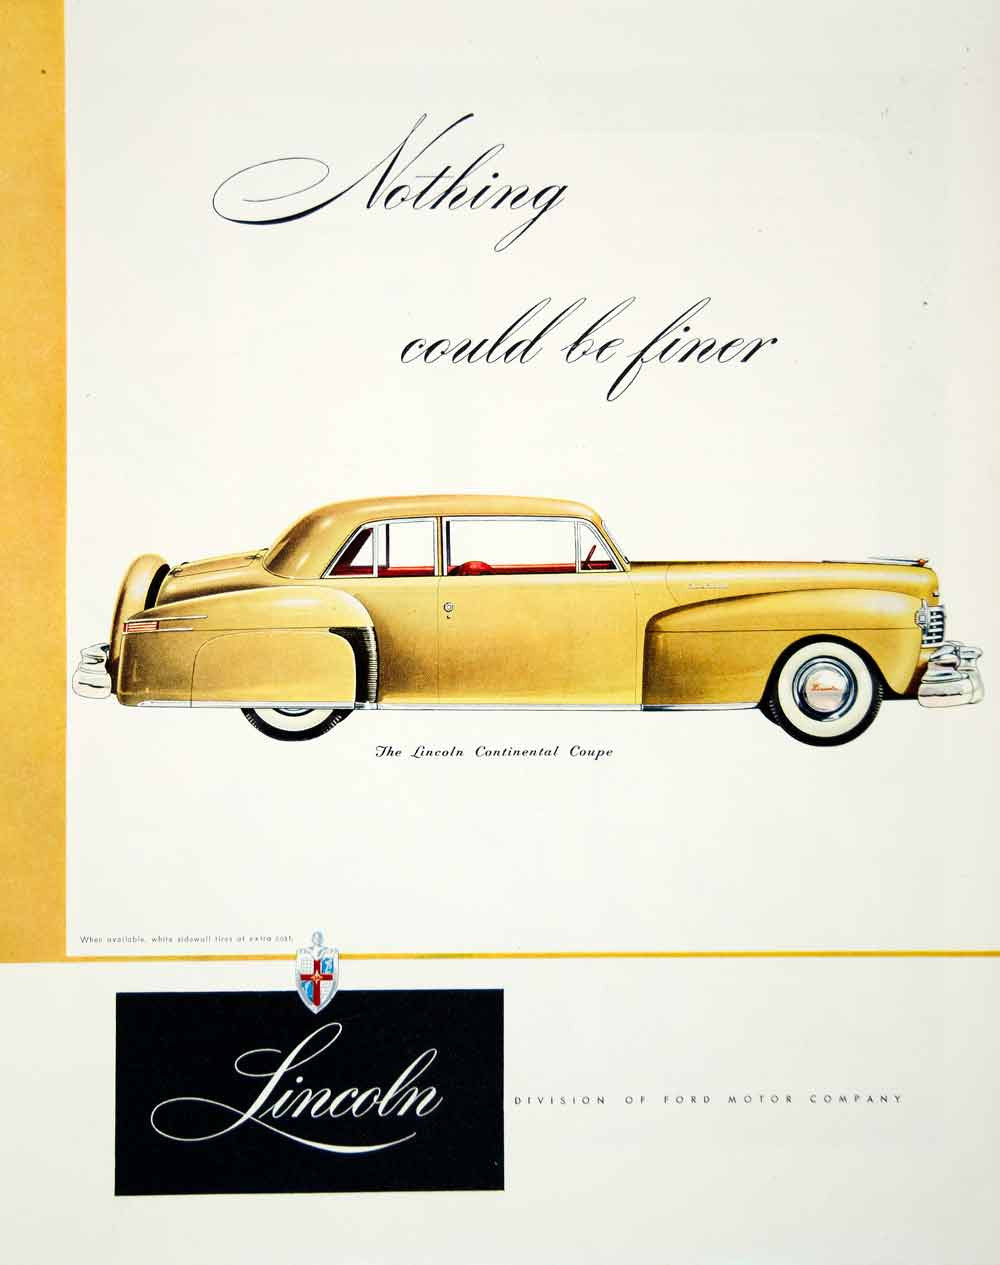 1947 Ad Lincoln Automobile Drive Car Continental Coupe Ford Motor Company FTM